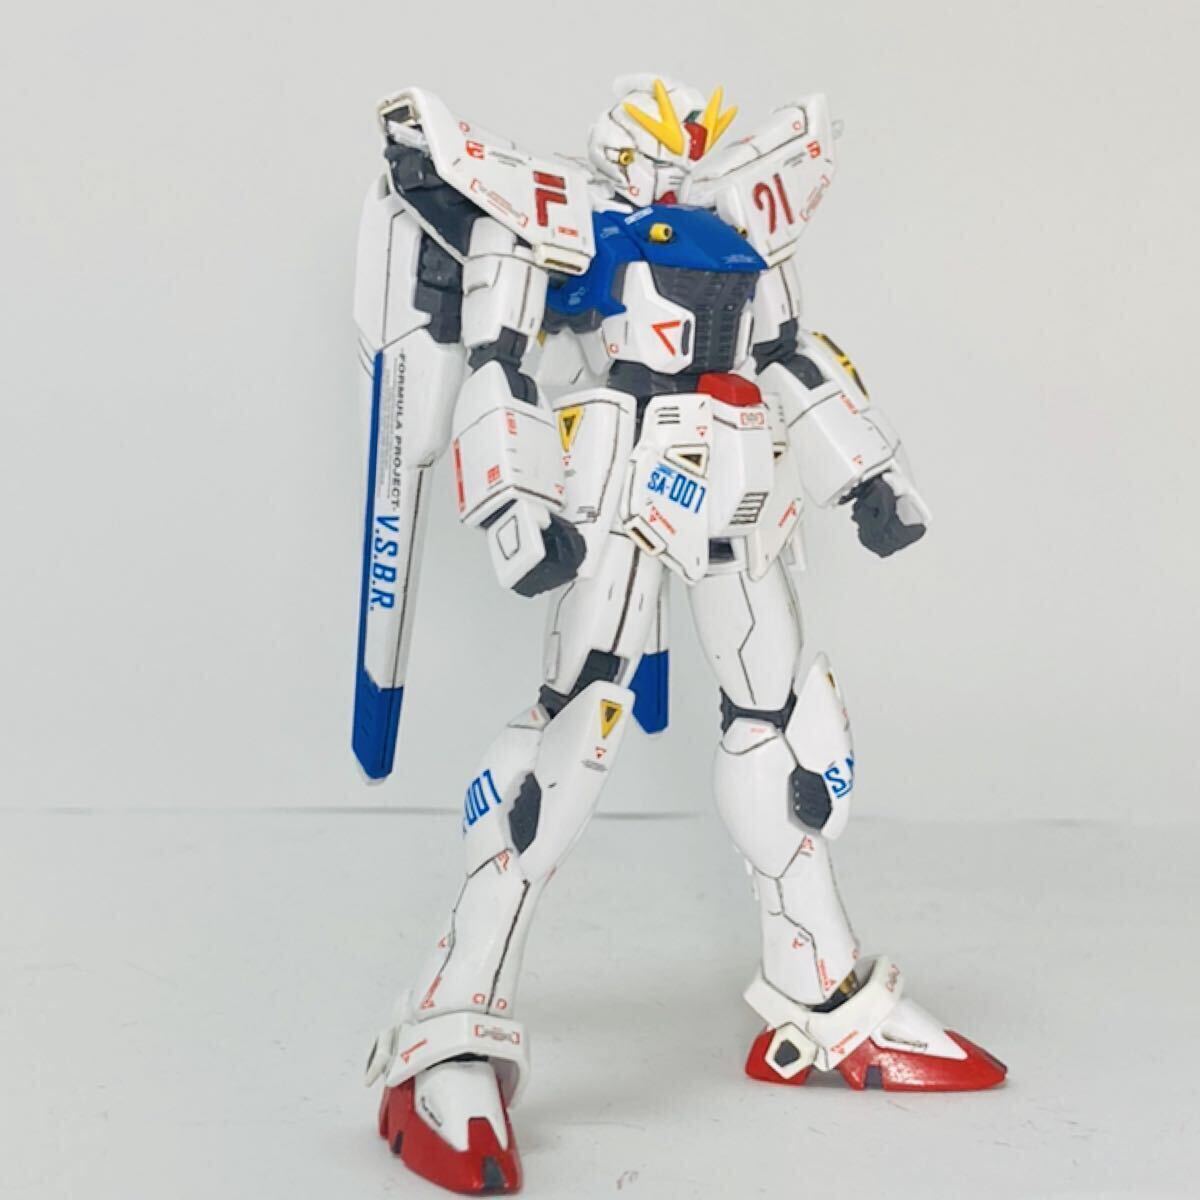 HGUC1/144 Gundam F91 modified . has painted final product 